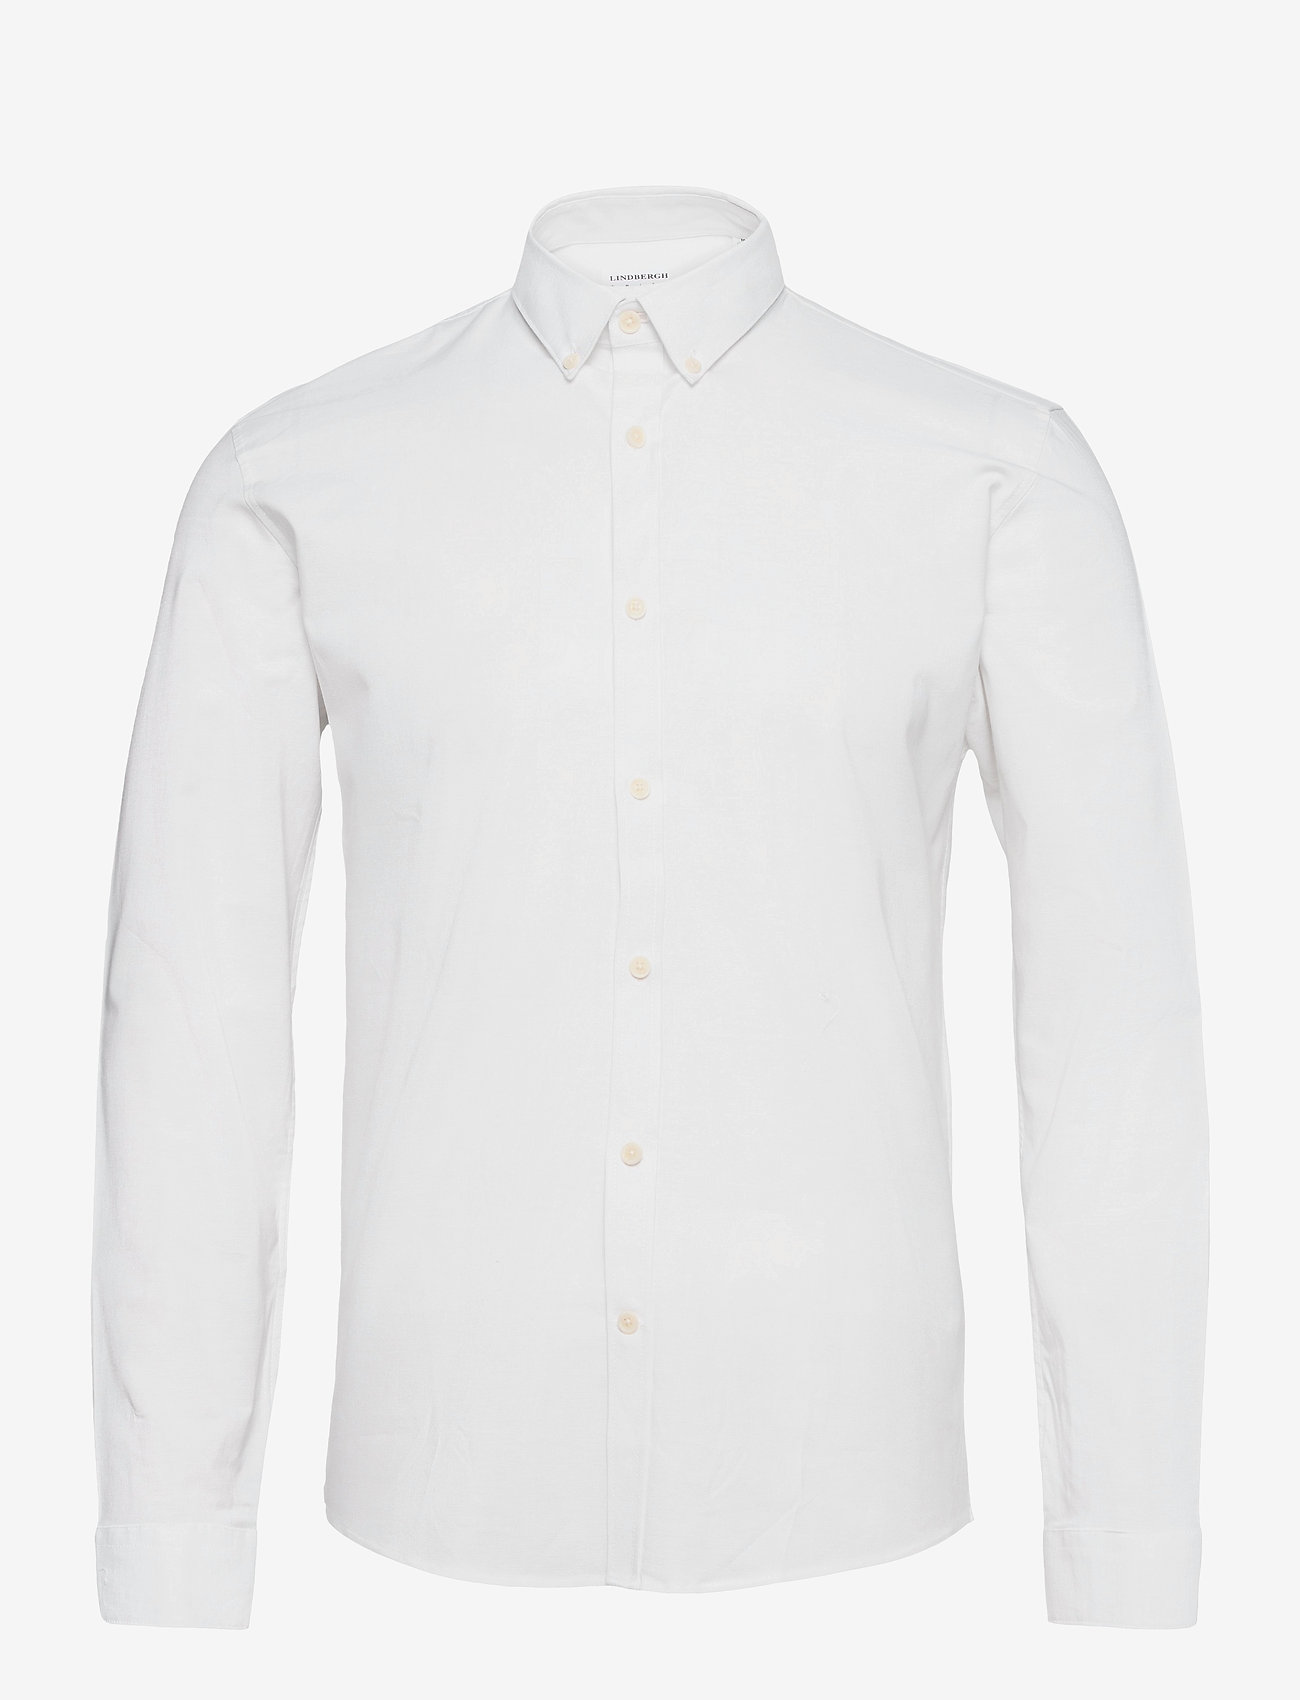 Lindbergh - Oxford superflex shirt L/S - oxford shirts - white - 0